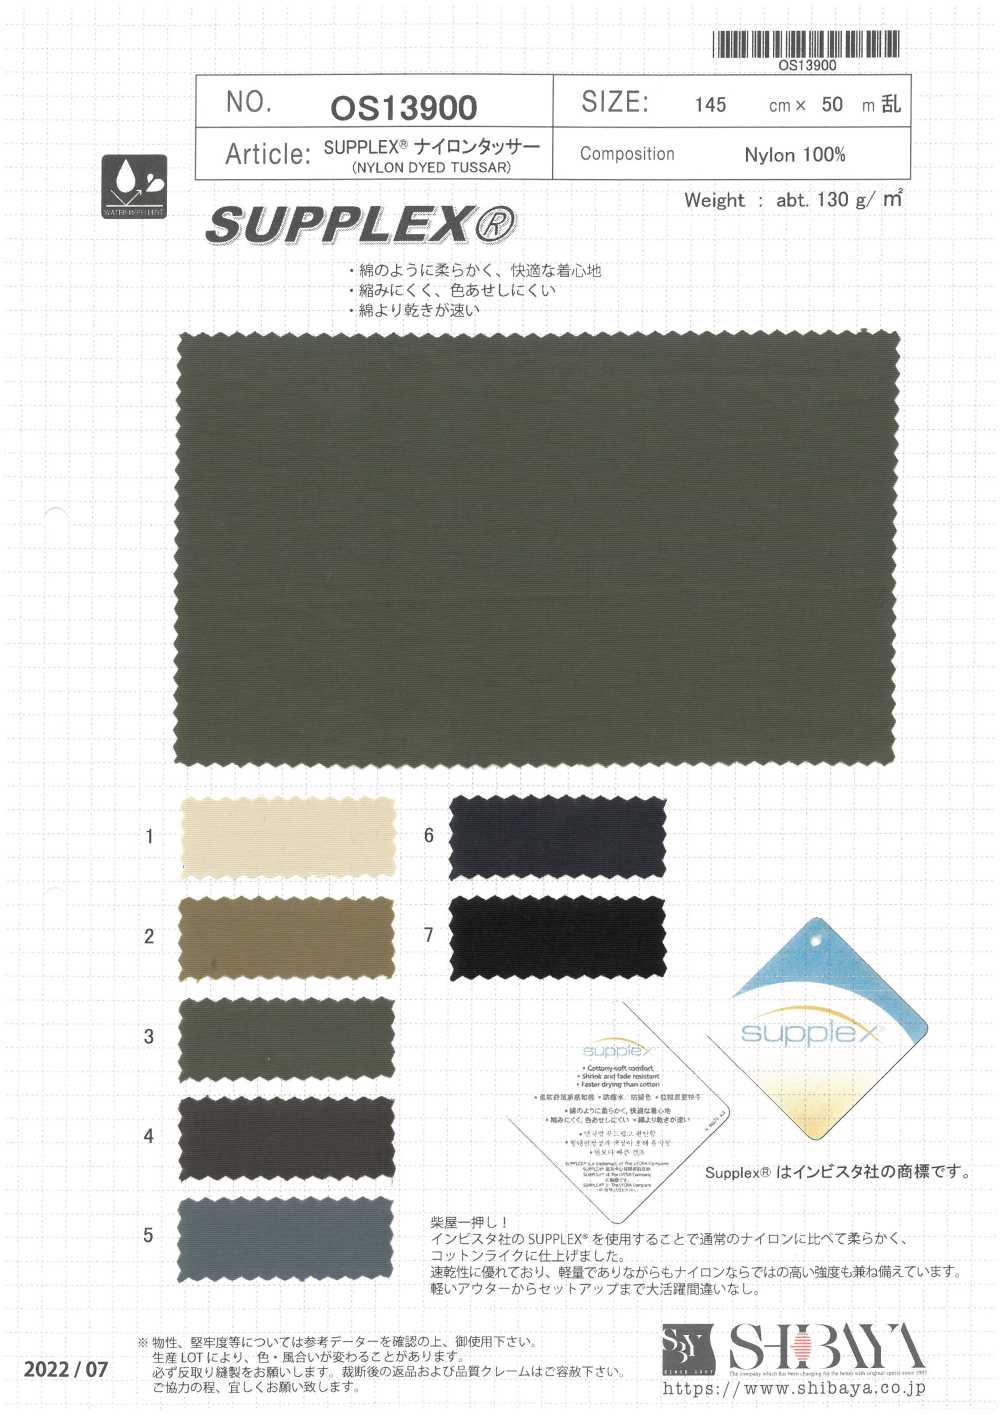 OS13900 SUPPLEX® Nylon Tussar[Textile / Fabric] SHIBAYA